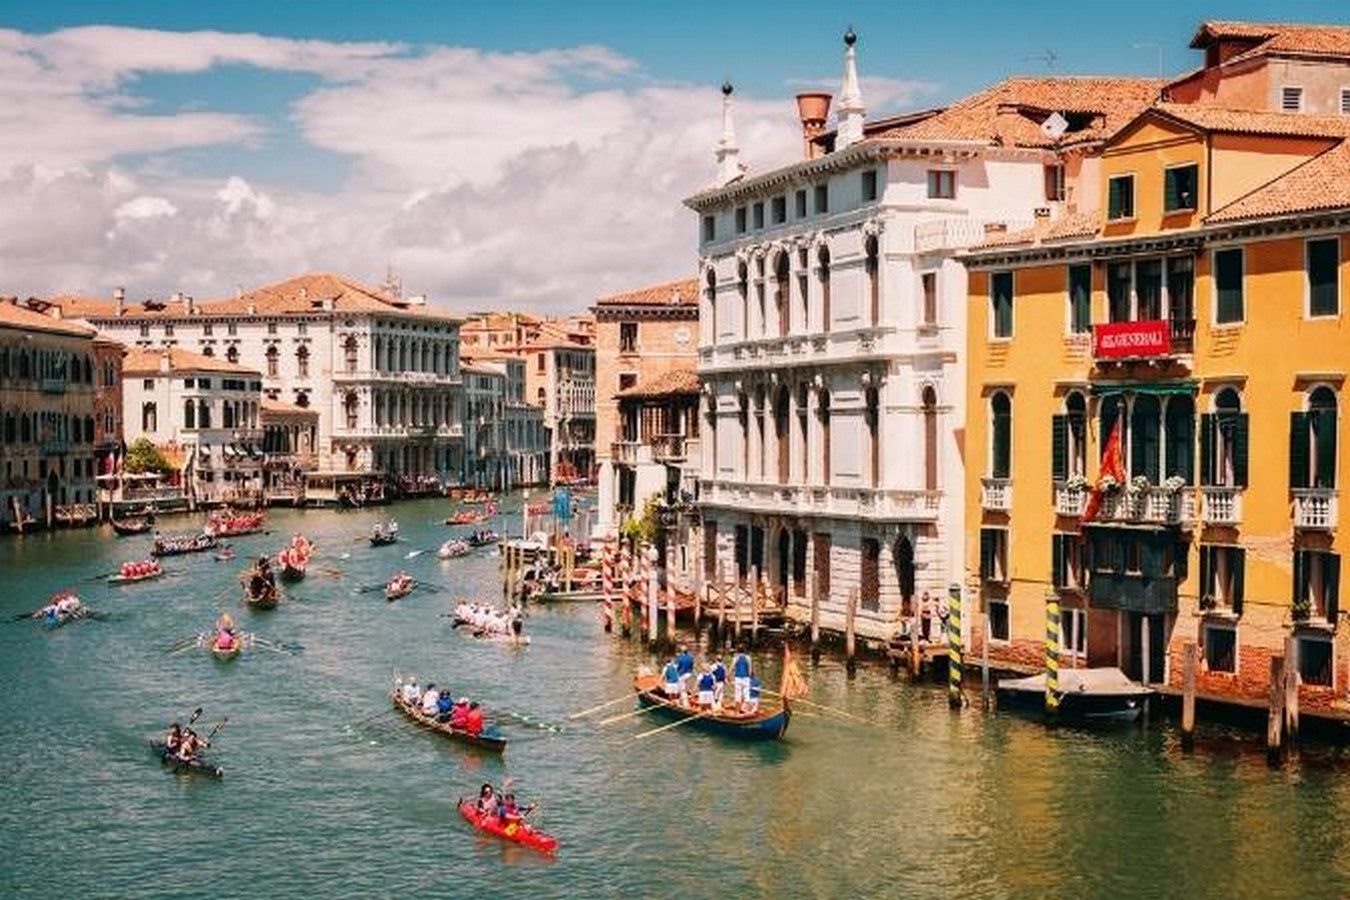 Venice and its lagoons, Italy - Sheet2